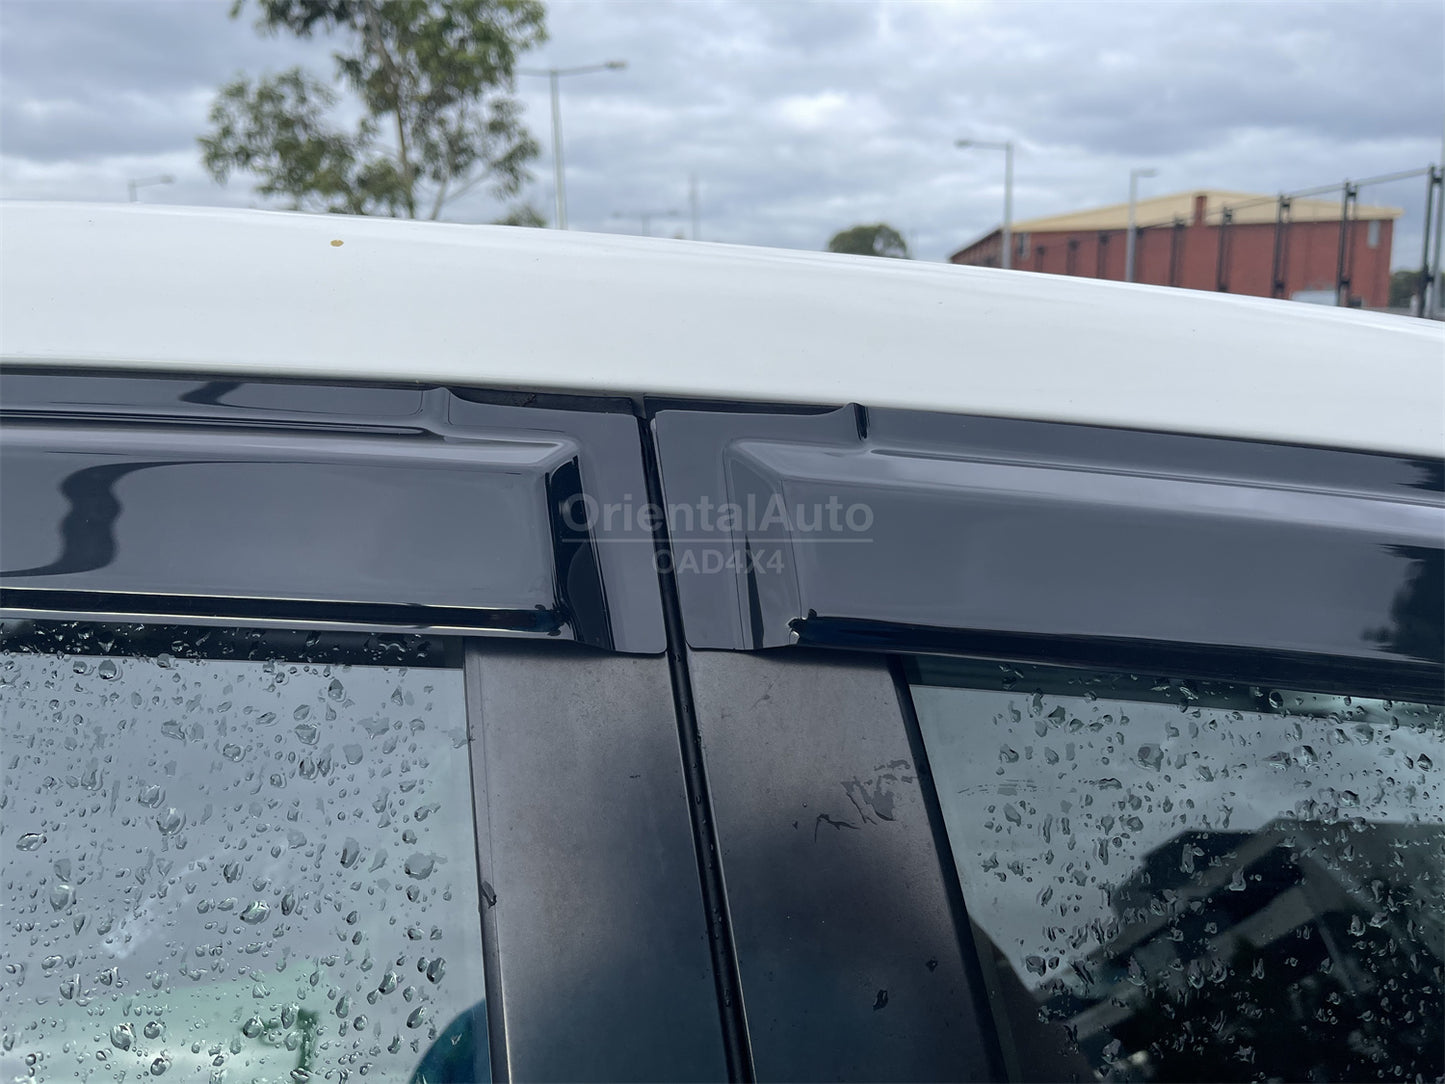 Luxury Weathershields Weather Shields Window Visor For Honda Jazz GE 2008-2014